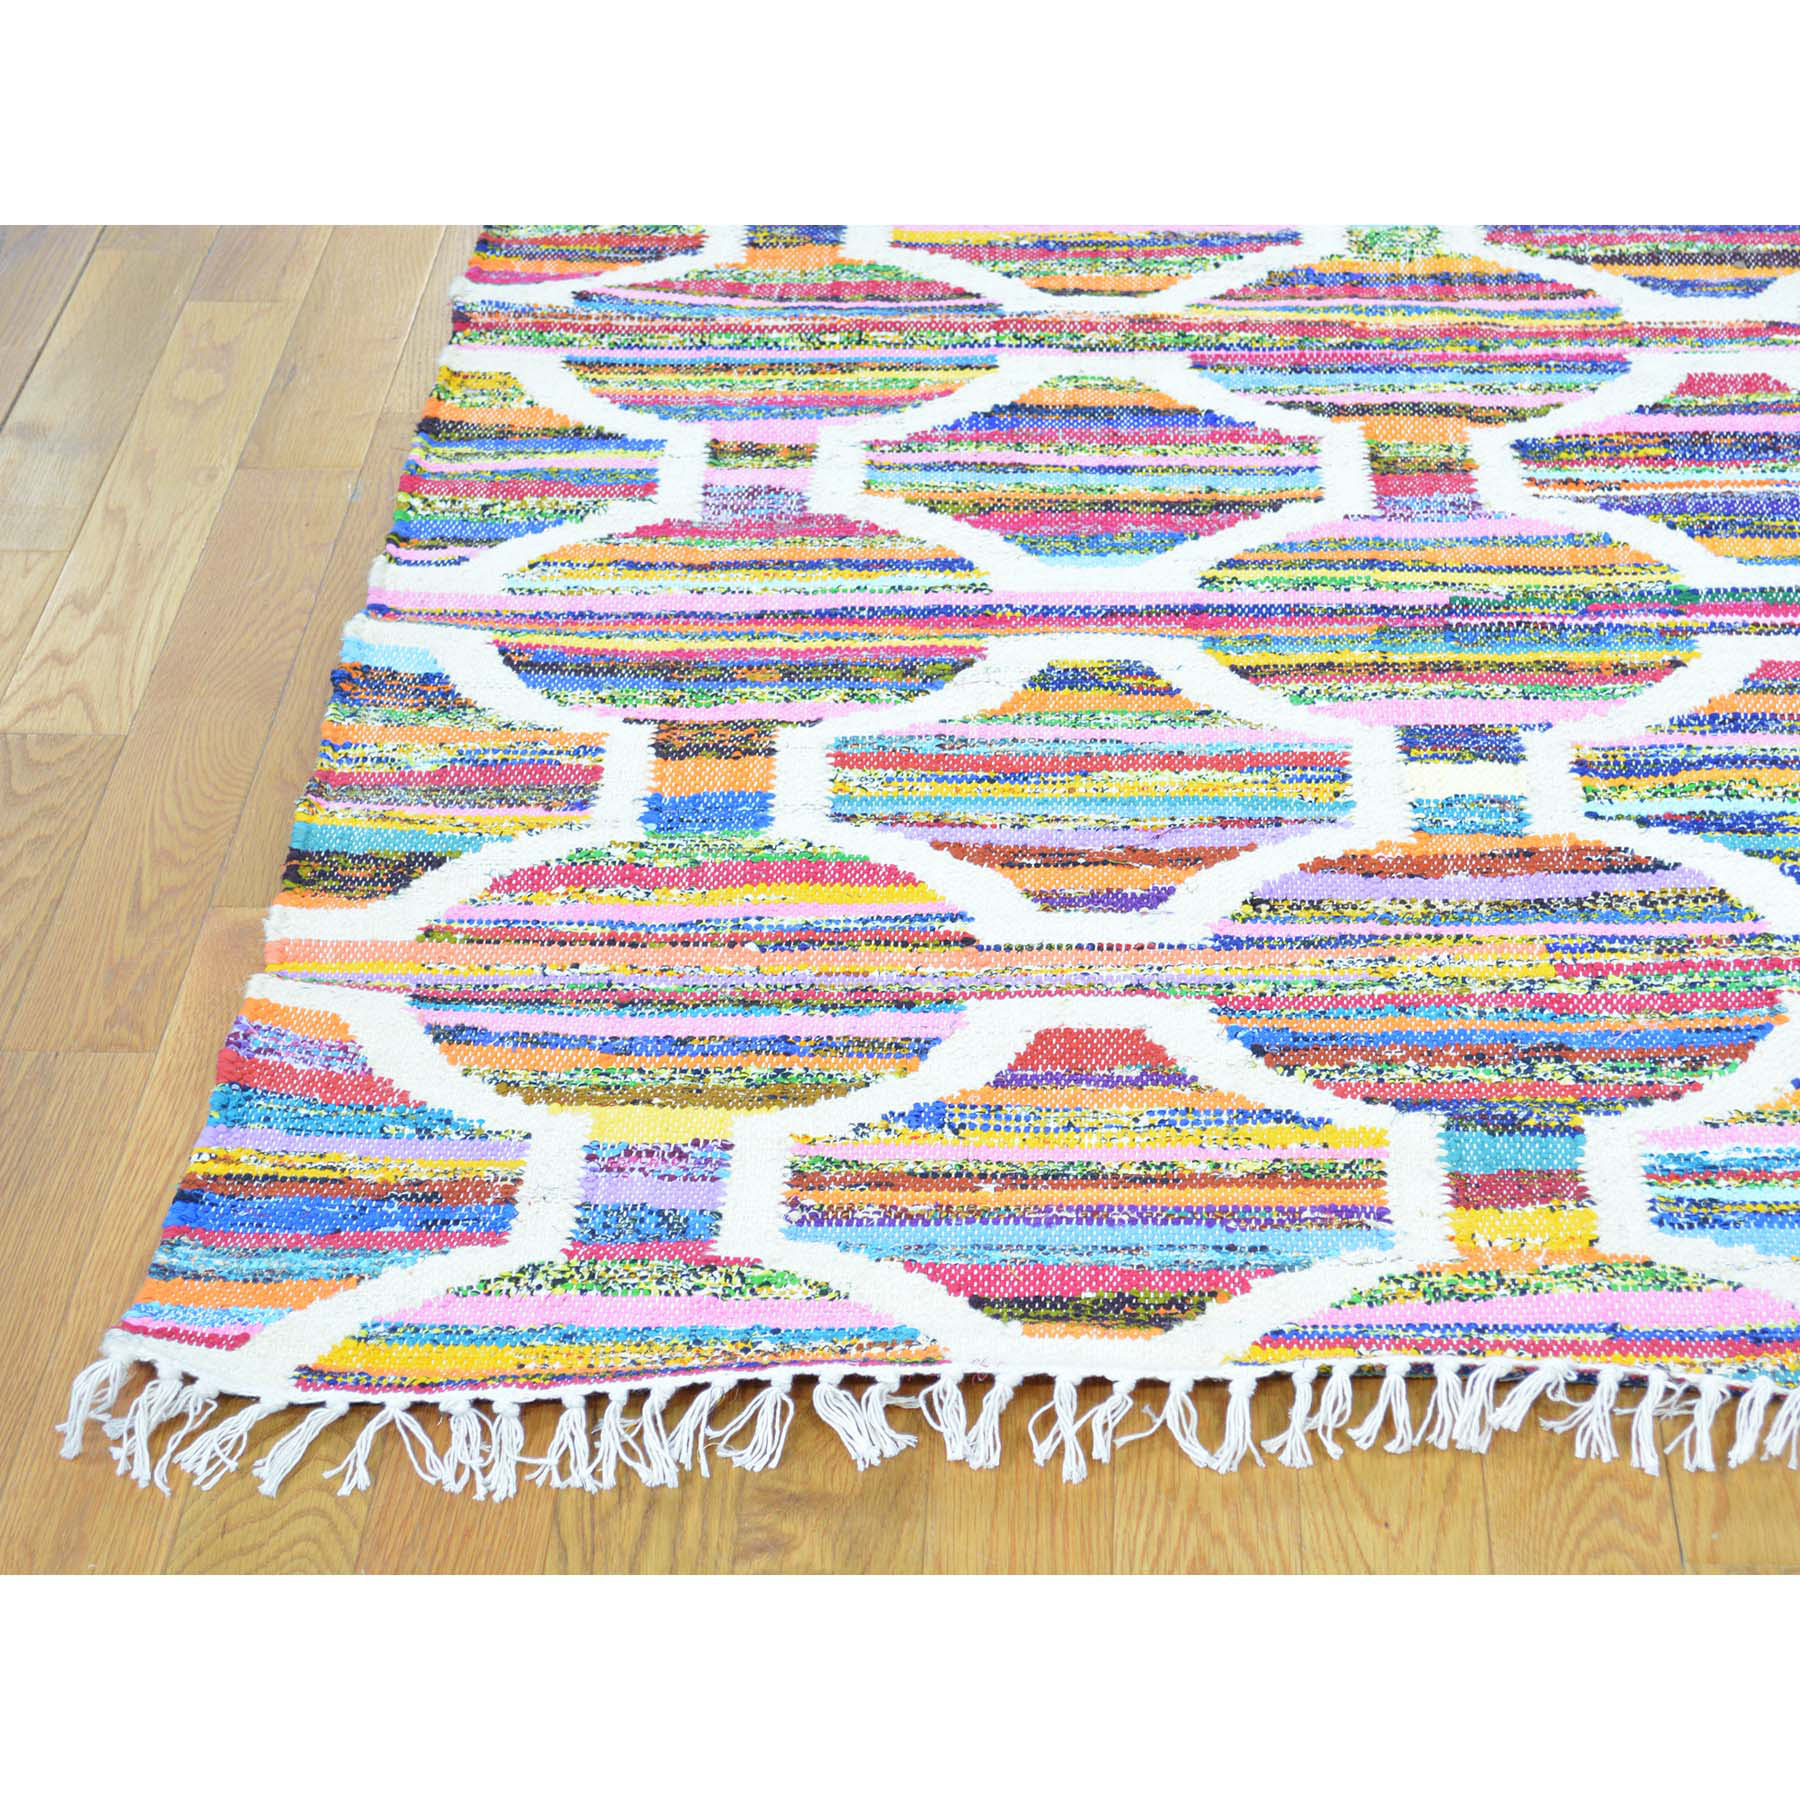 10-x13-10  Flat Weave Kilim Geometric Design Hand Woven Oriental Rug 